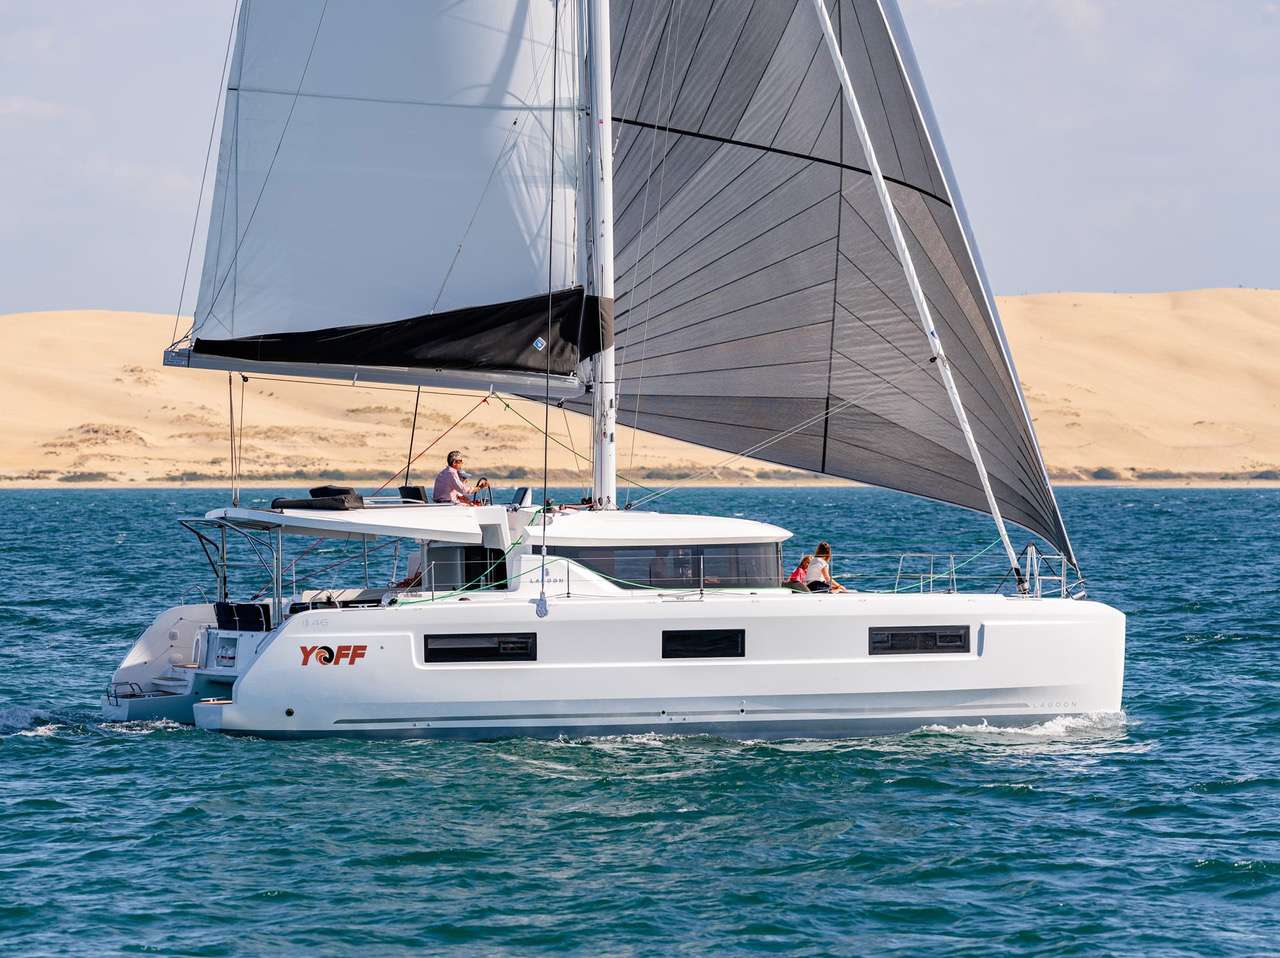 YOFF - Yacht Charter Beaulieu-sur-Mer & Boat hire in Fr. Riviera, Corsica & Sardinia 1